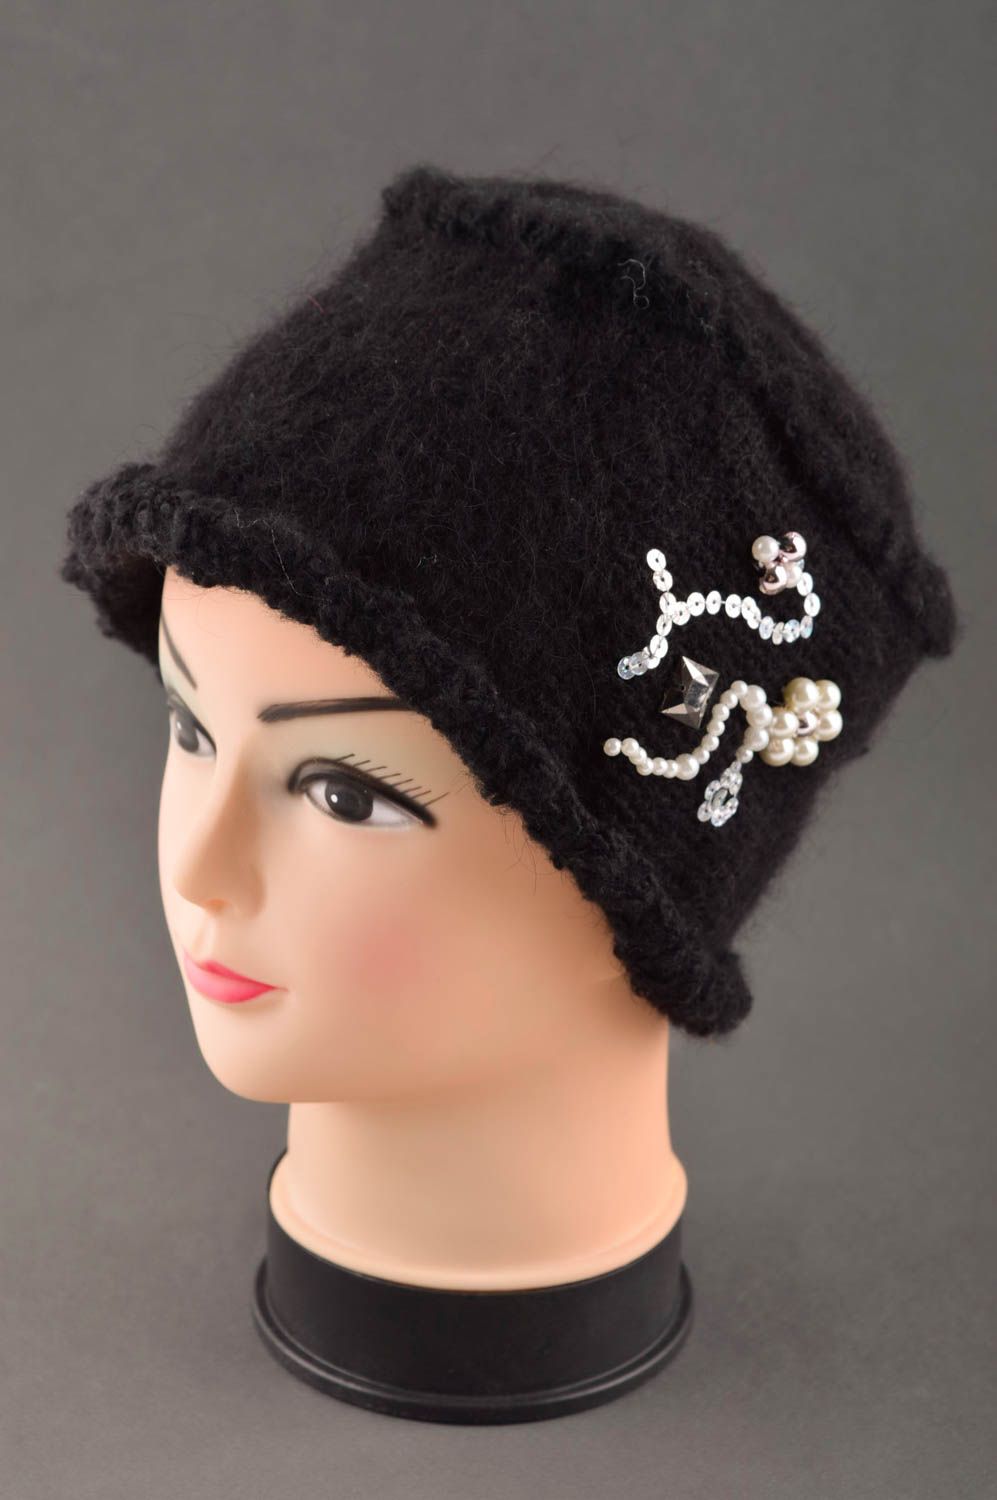 Handmade warm hat unusual hat for girls crocheted hat warm hat for winter photo 1